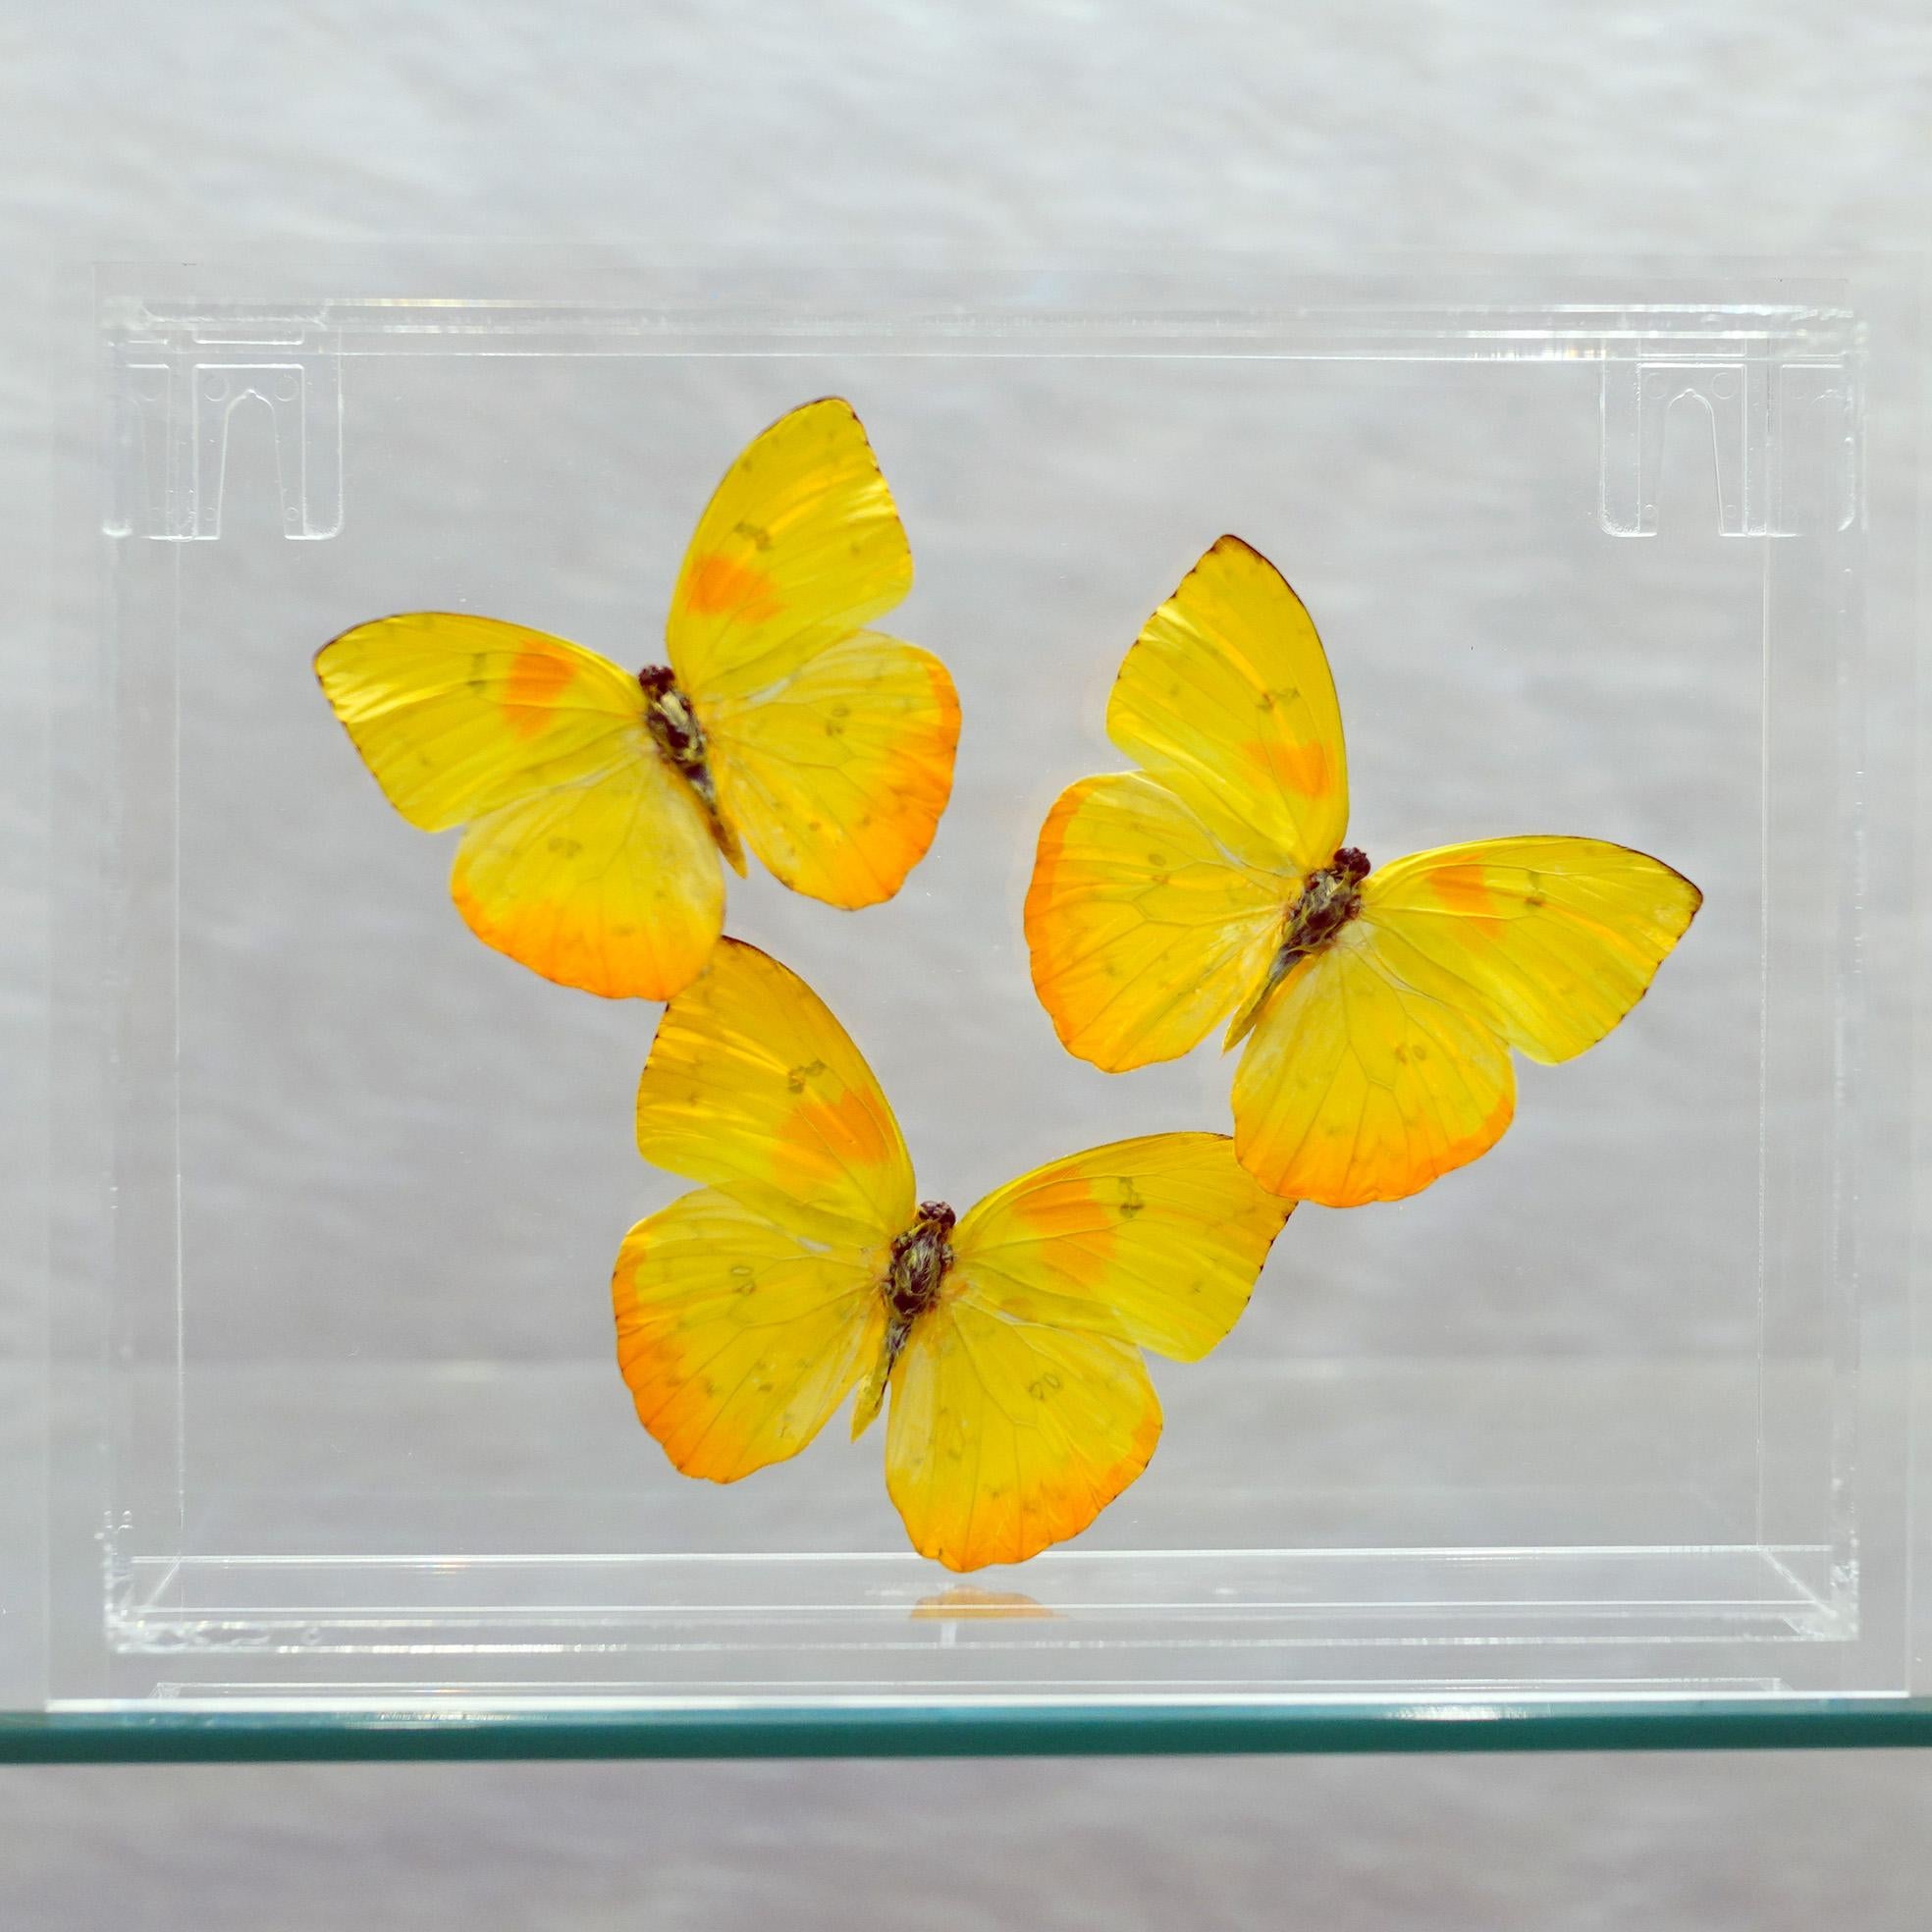 North American Genuine Butterflies in Lucite Display Box // Ver. 3